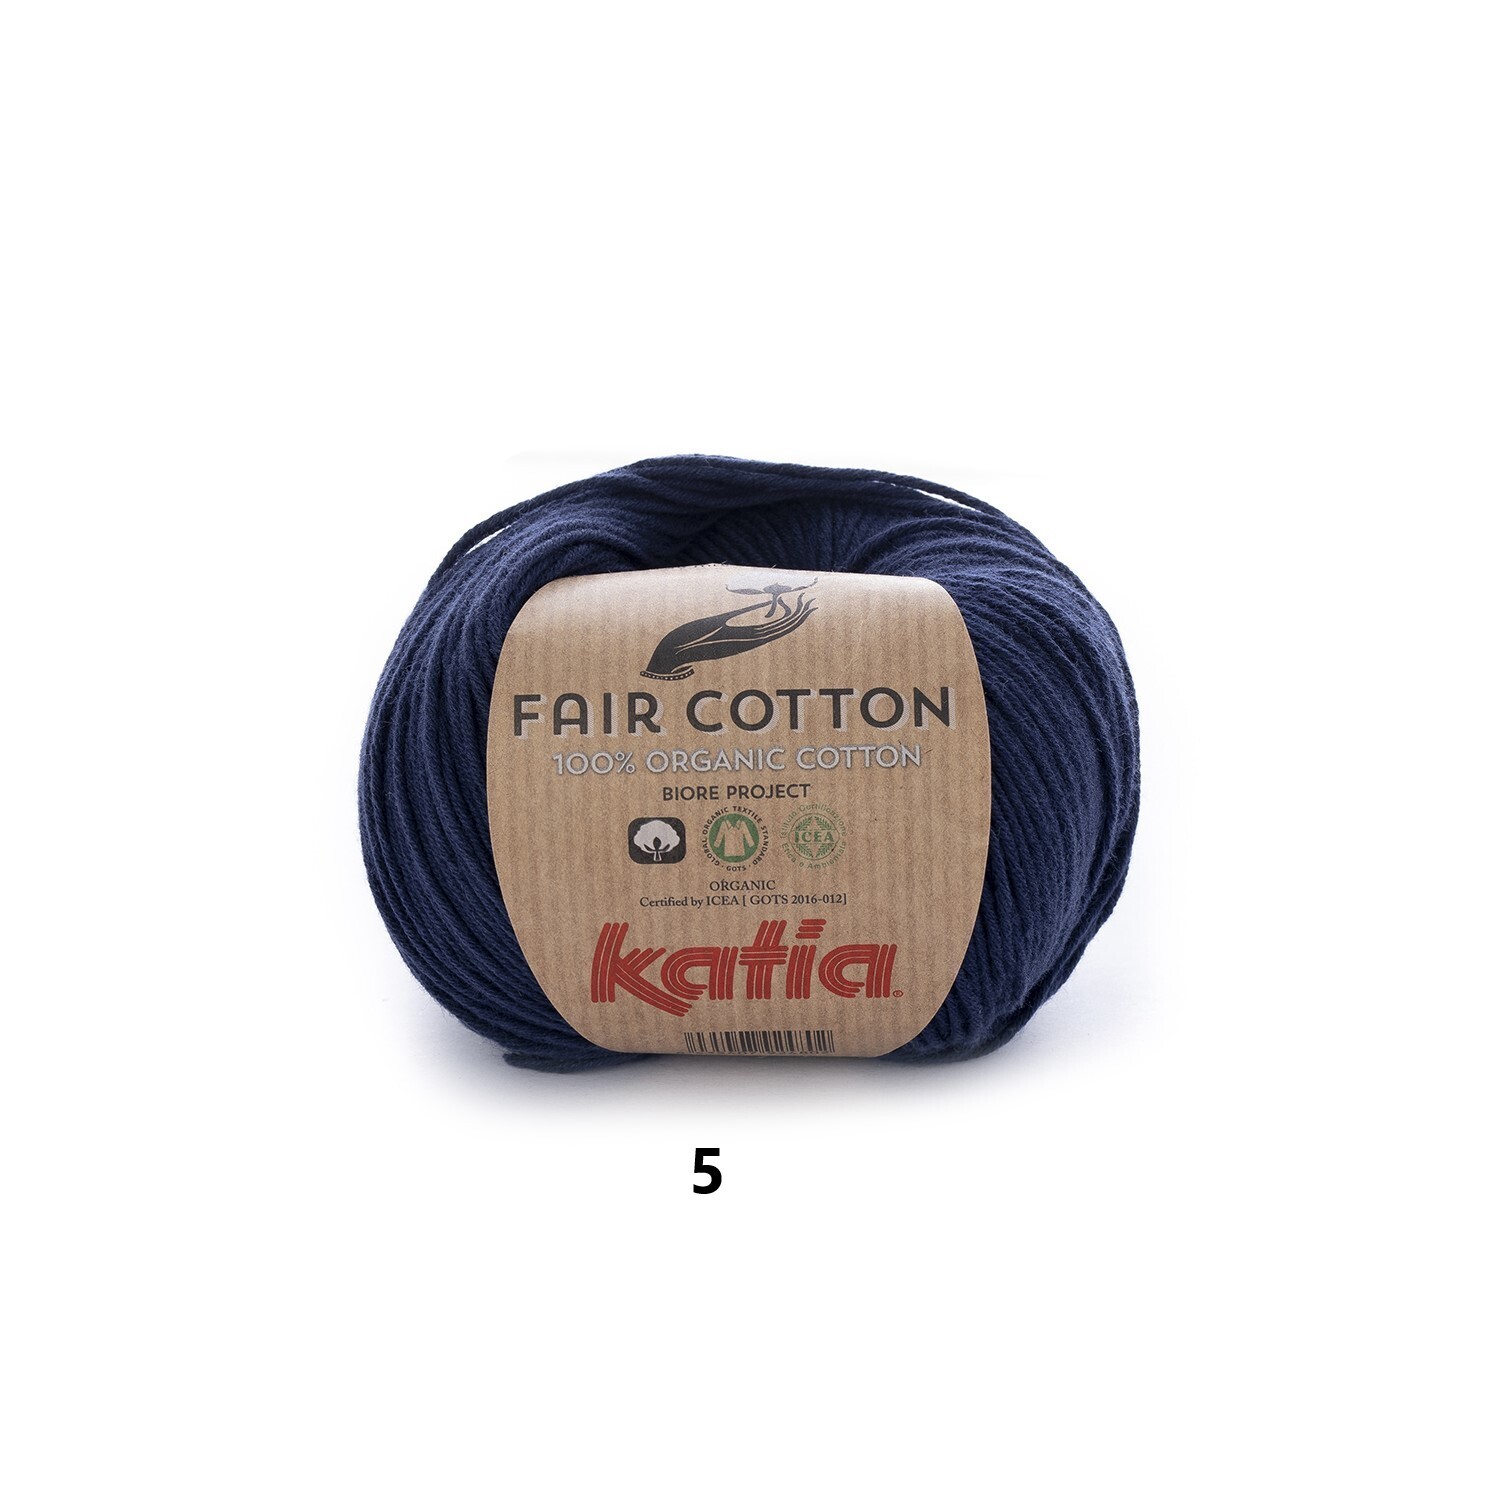 Fair cotton